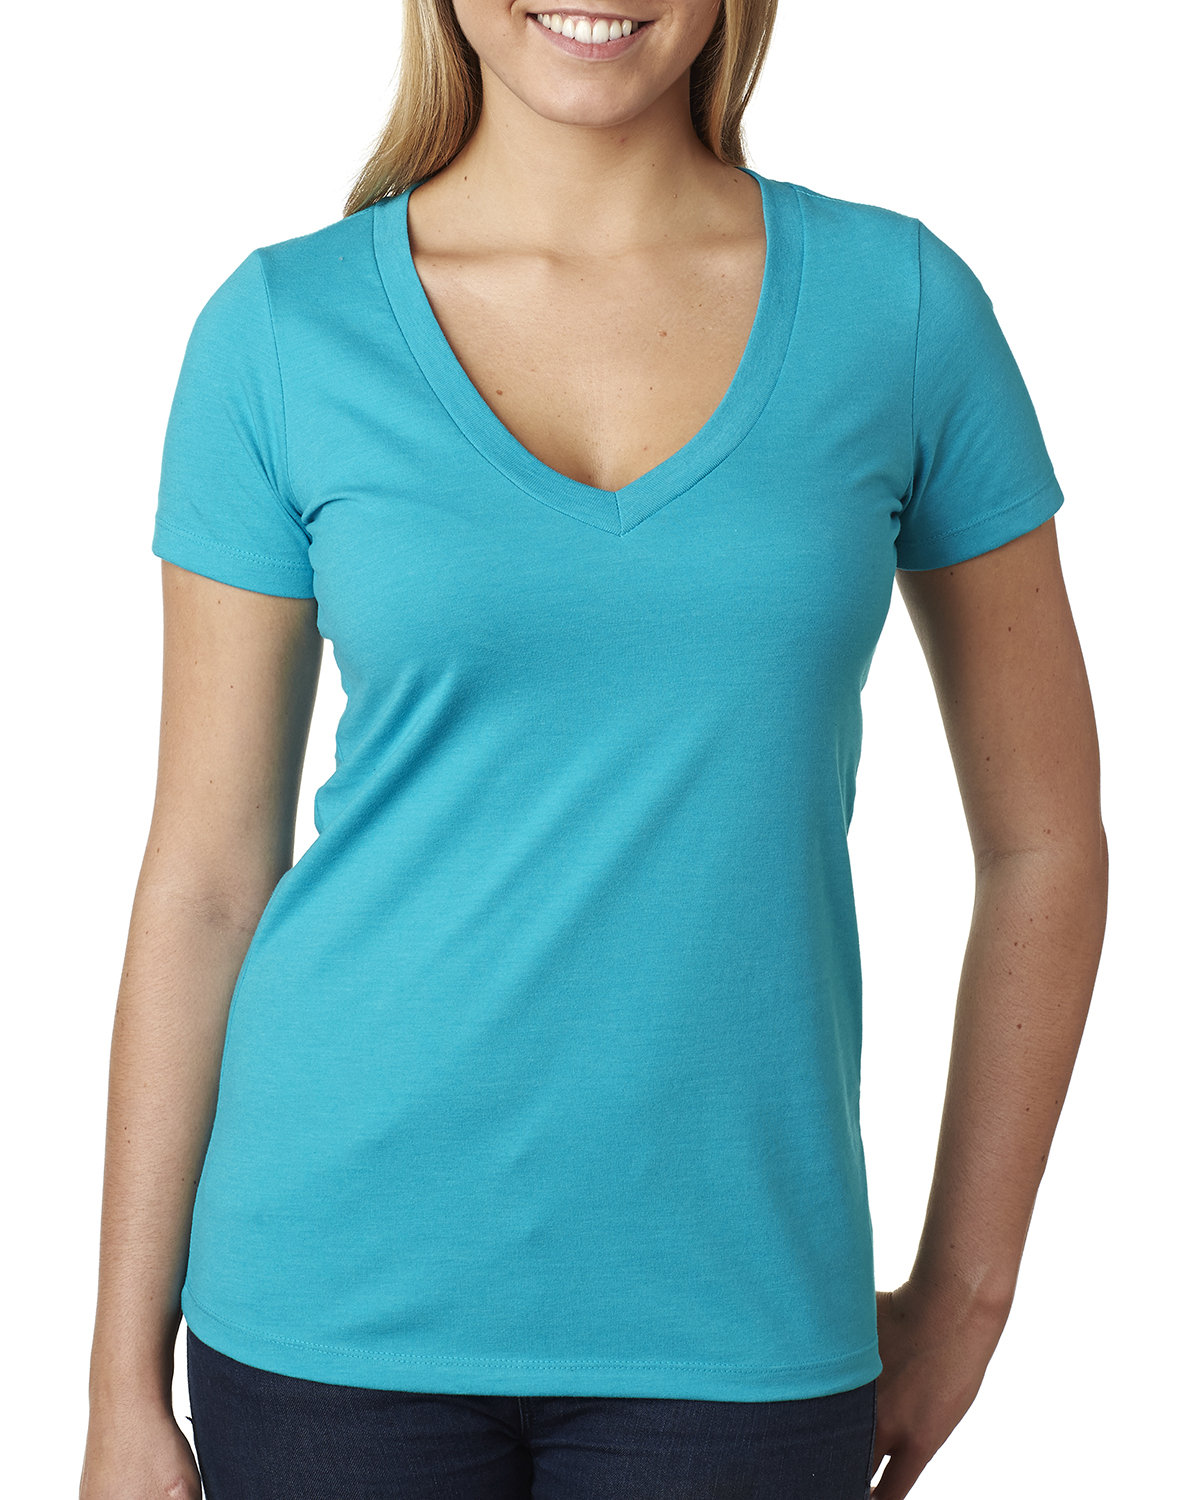 Next Level Apparel Ladies' CVC Deep V-Neck T-Shirt BONDI BLUE 